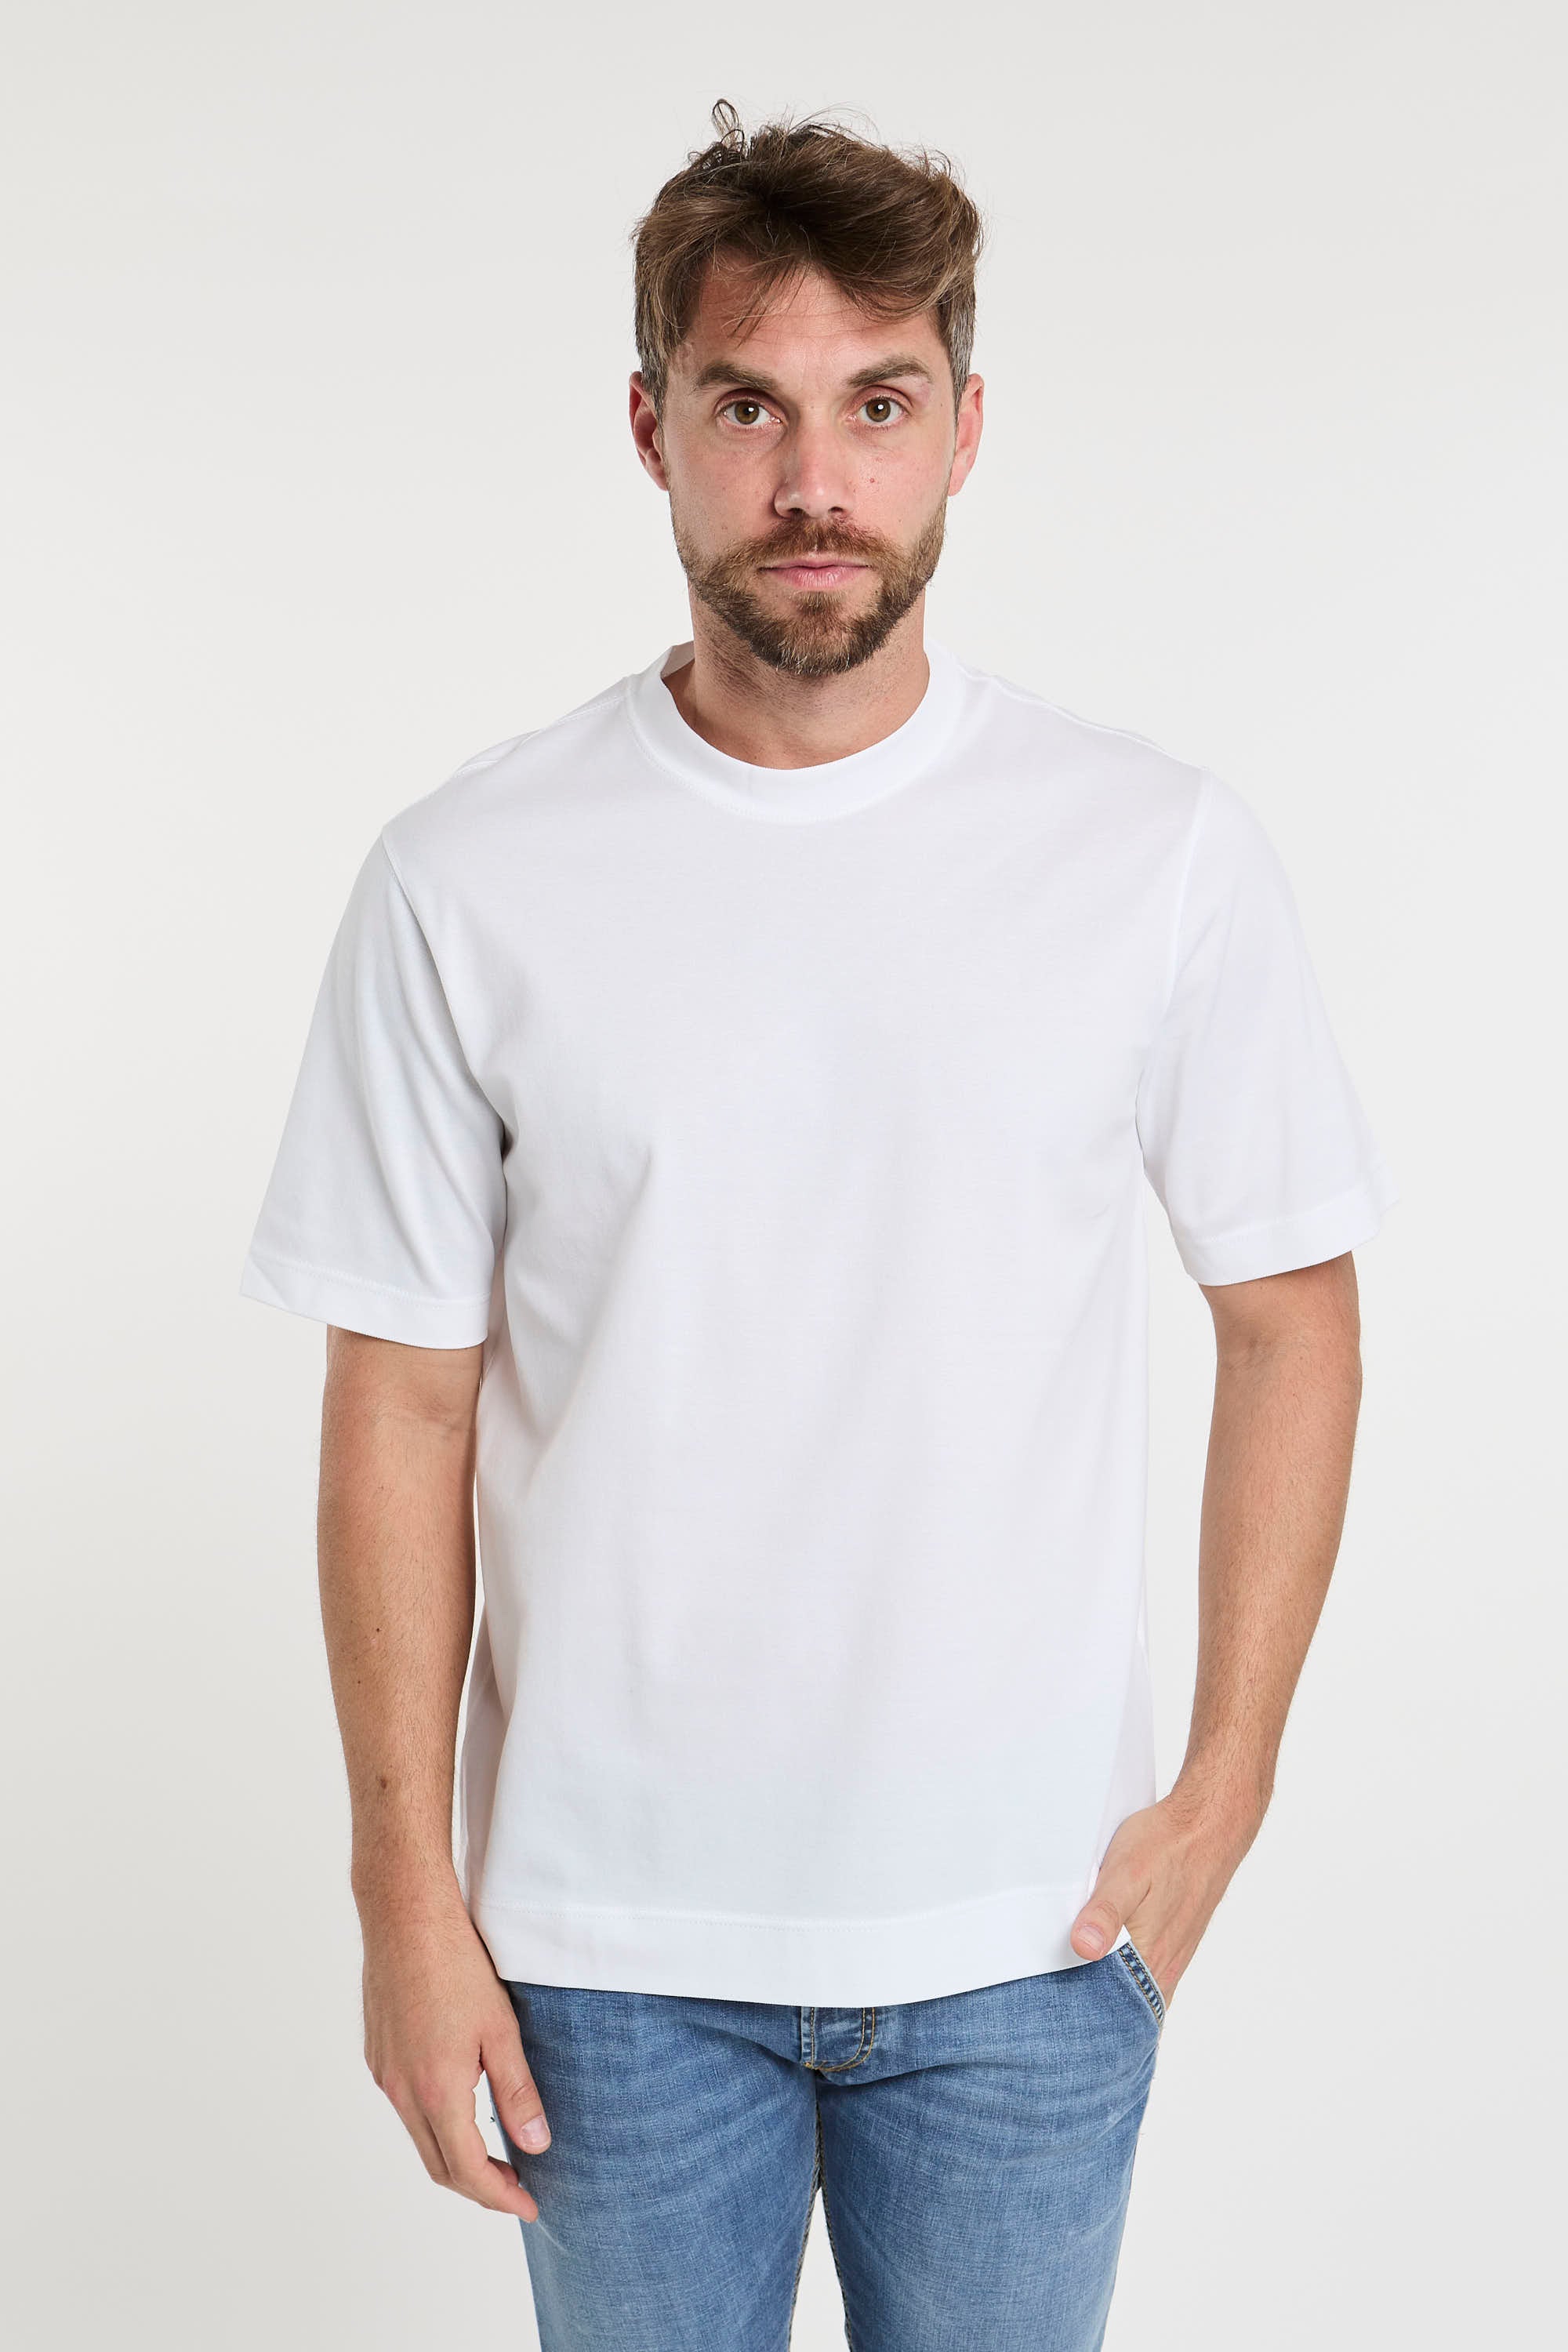 Circolo 1901 T-Shirt Baumwolle Weiß 6505-4